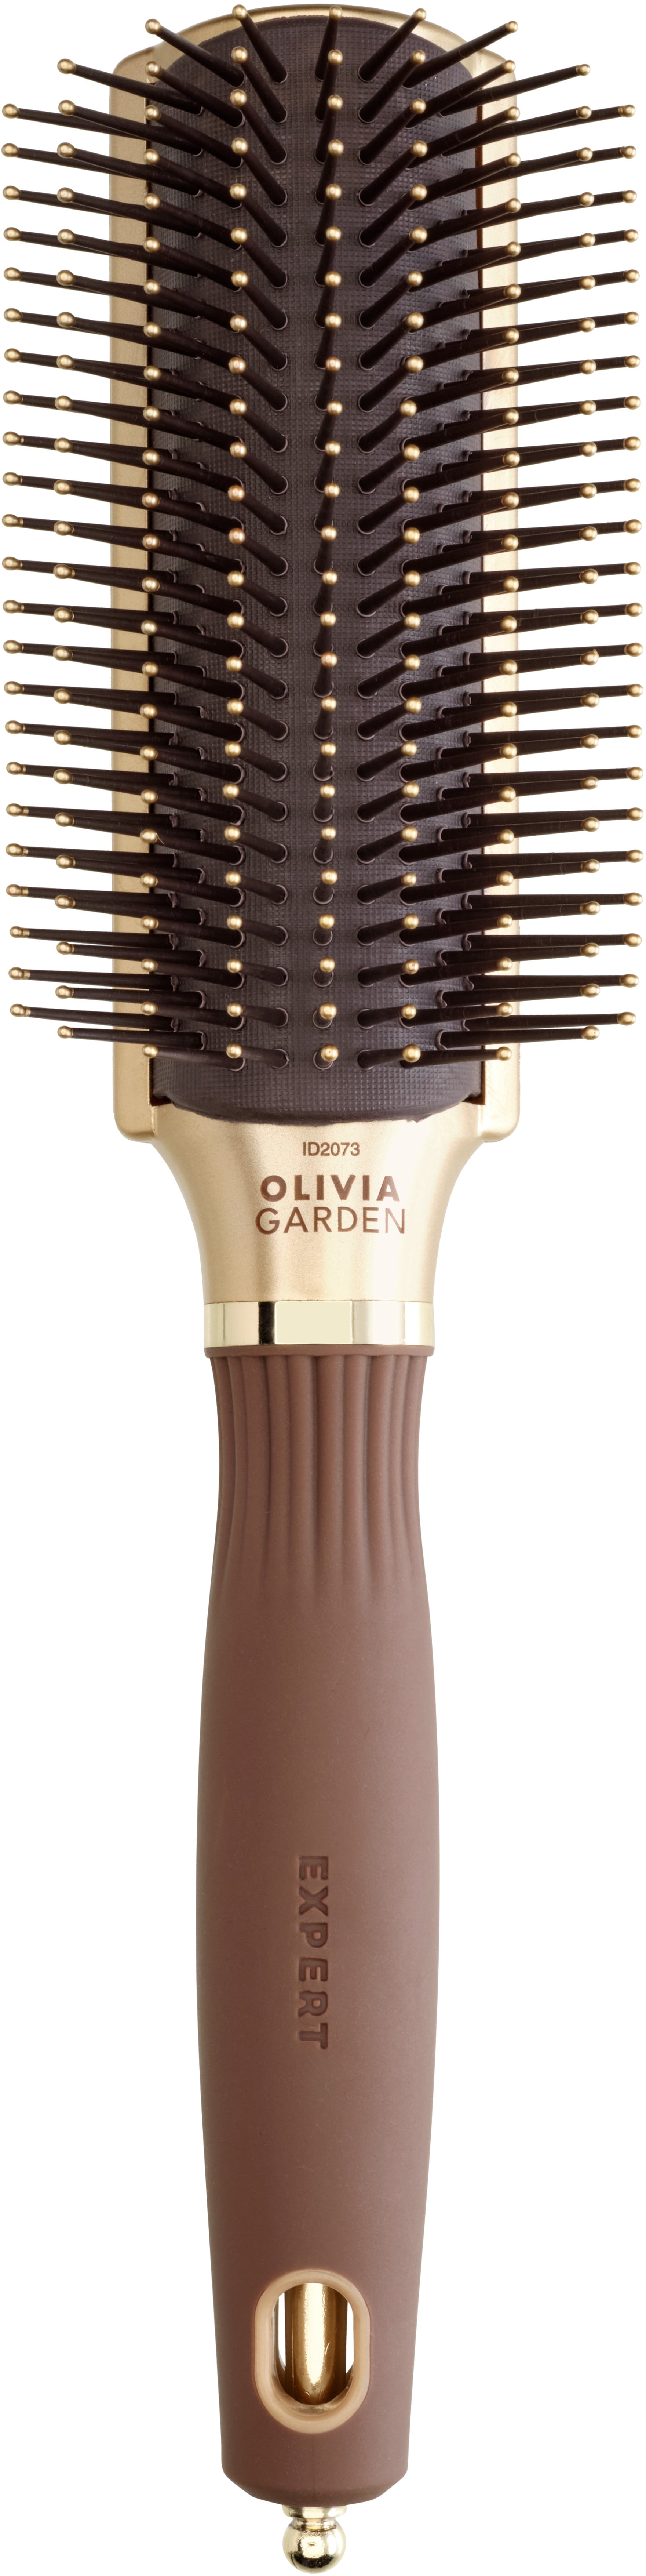 Image du produit de Olivia Garden - EXPERT STYLE CONTROL Nylon Bristles Gold&Brown